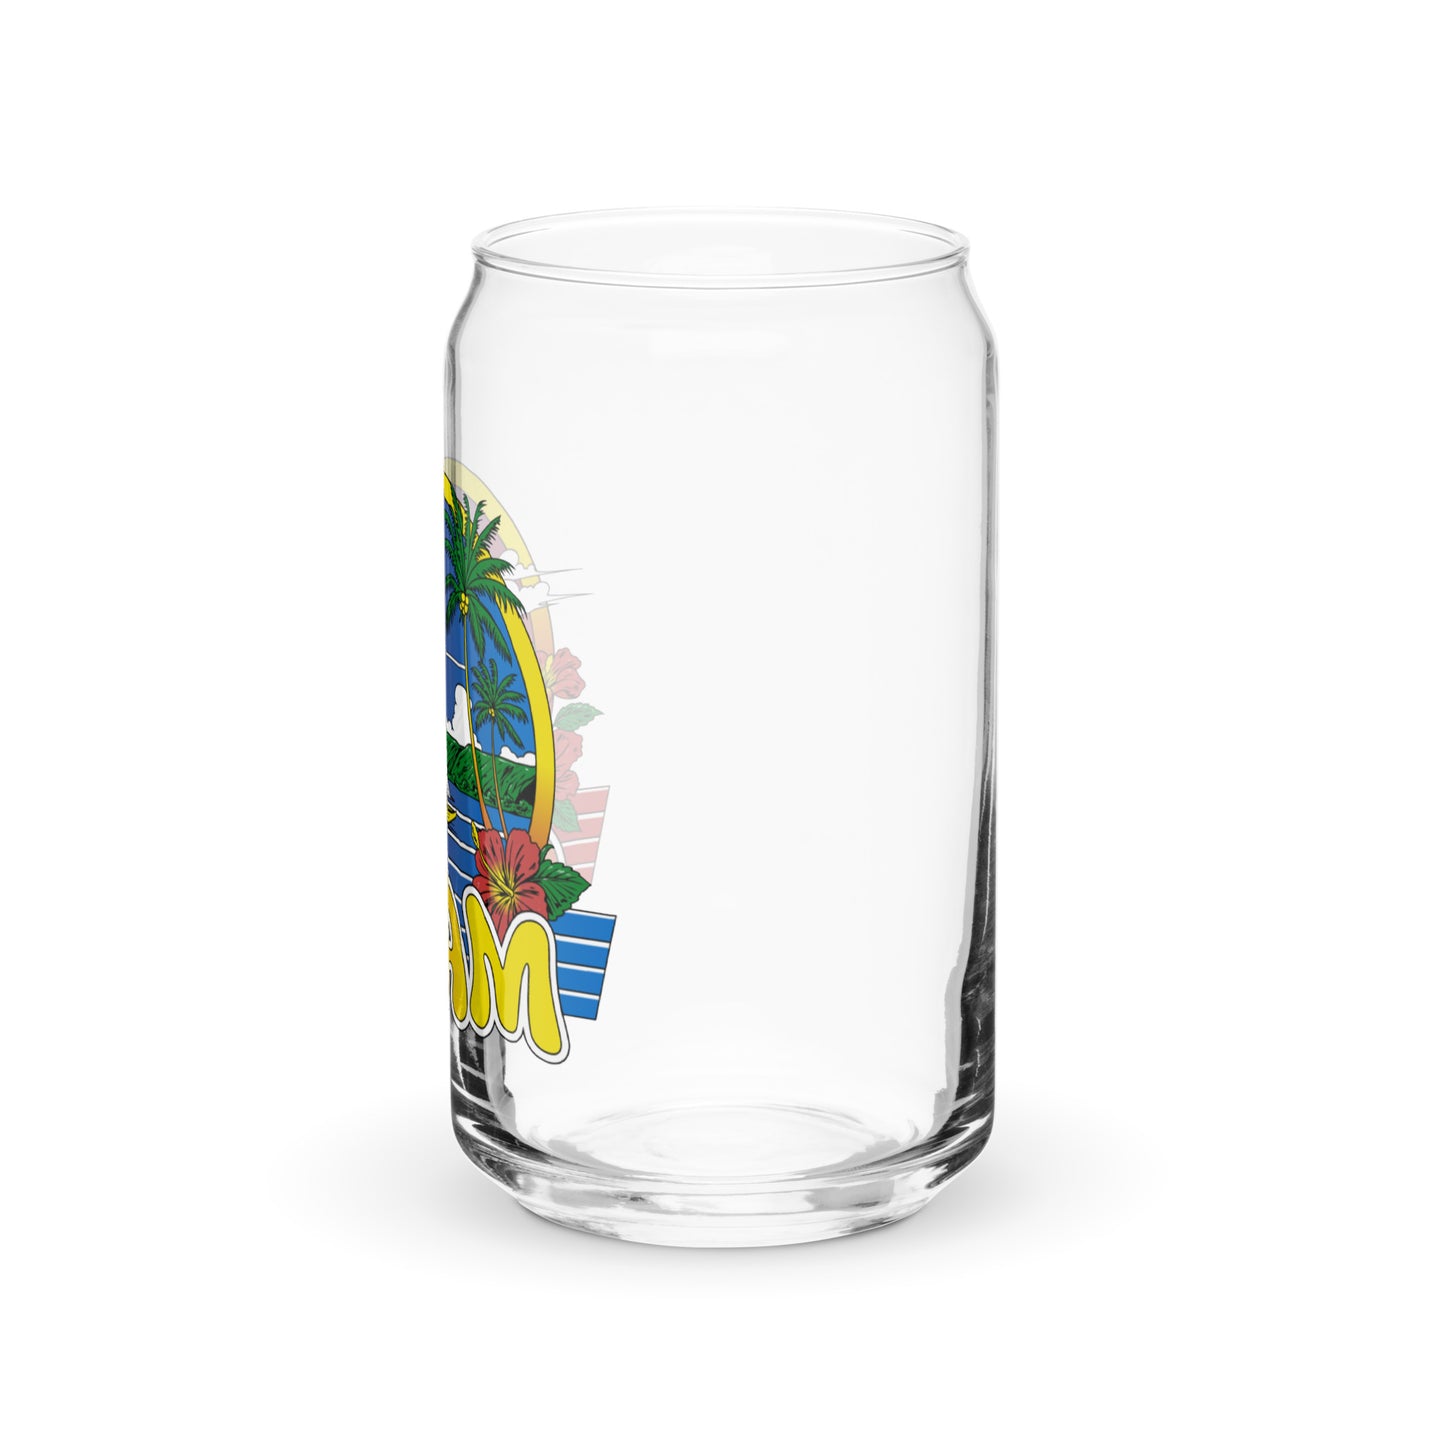 Retro Guam Can-shaped glass